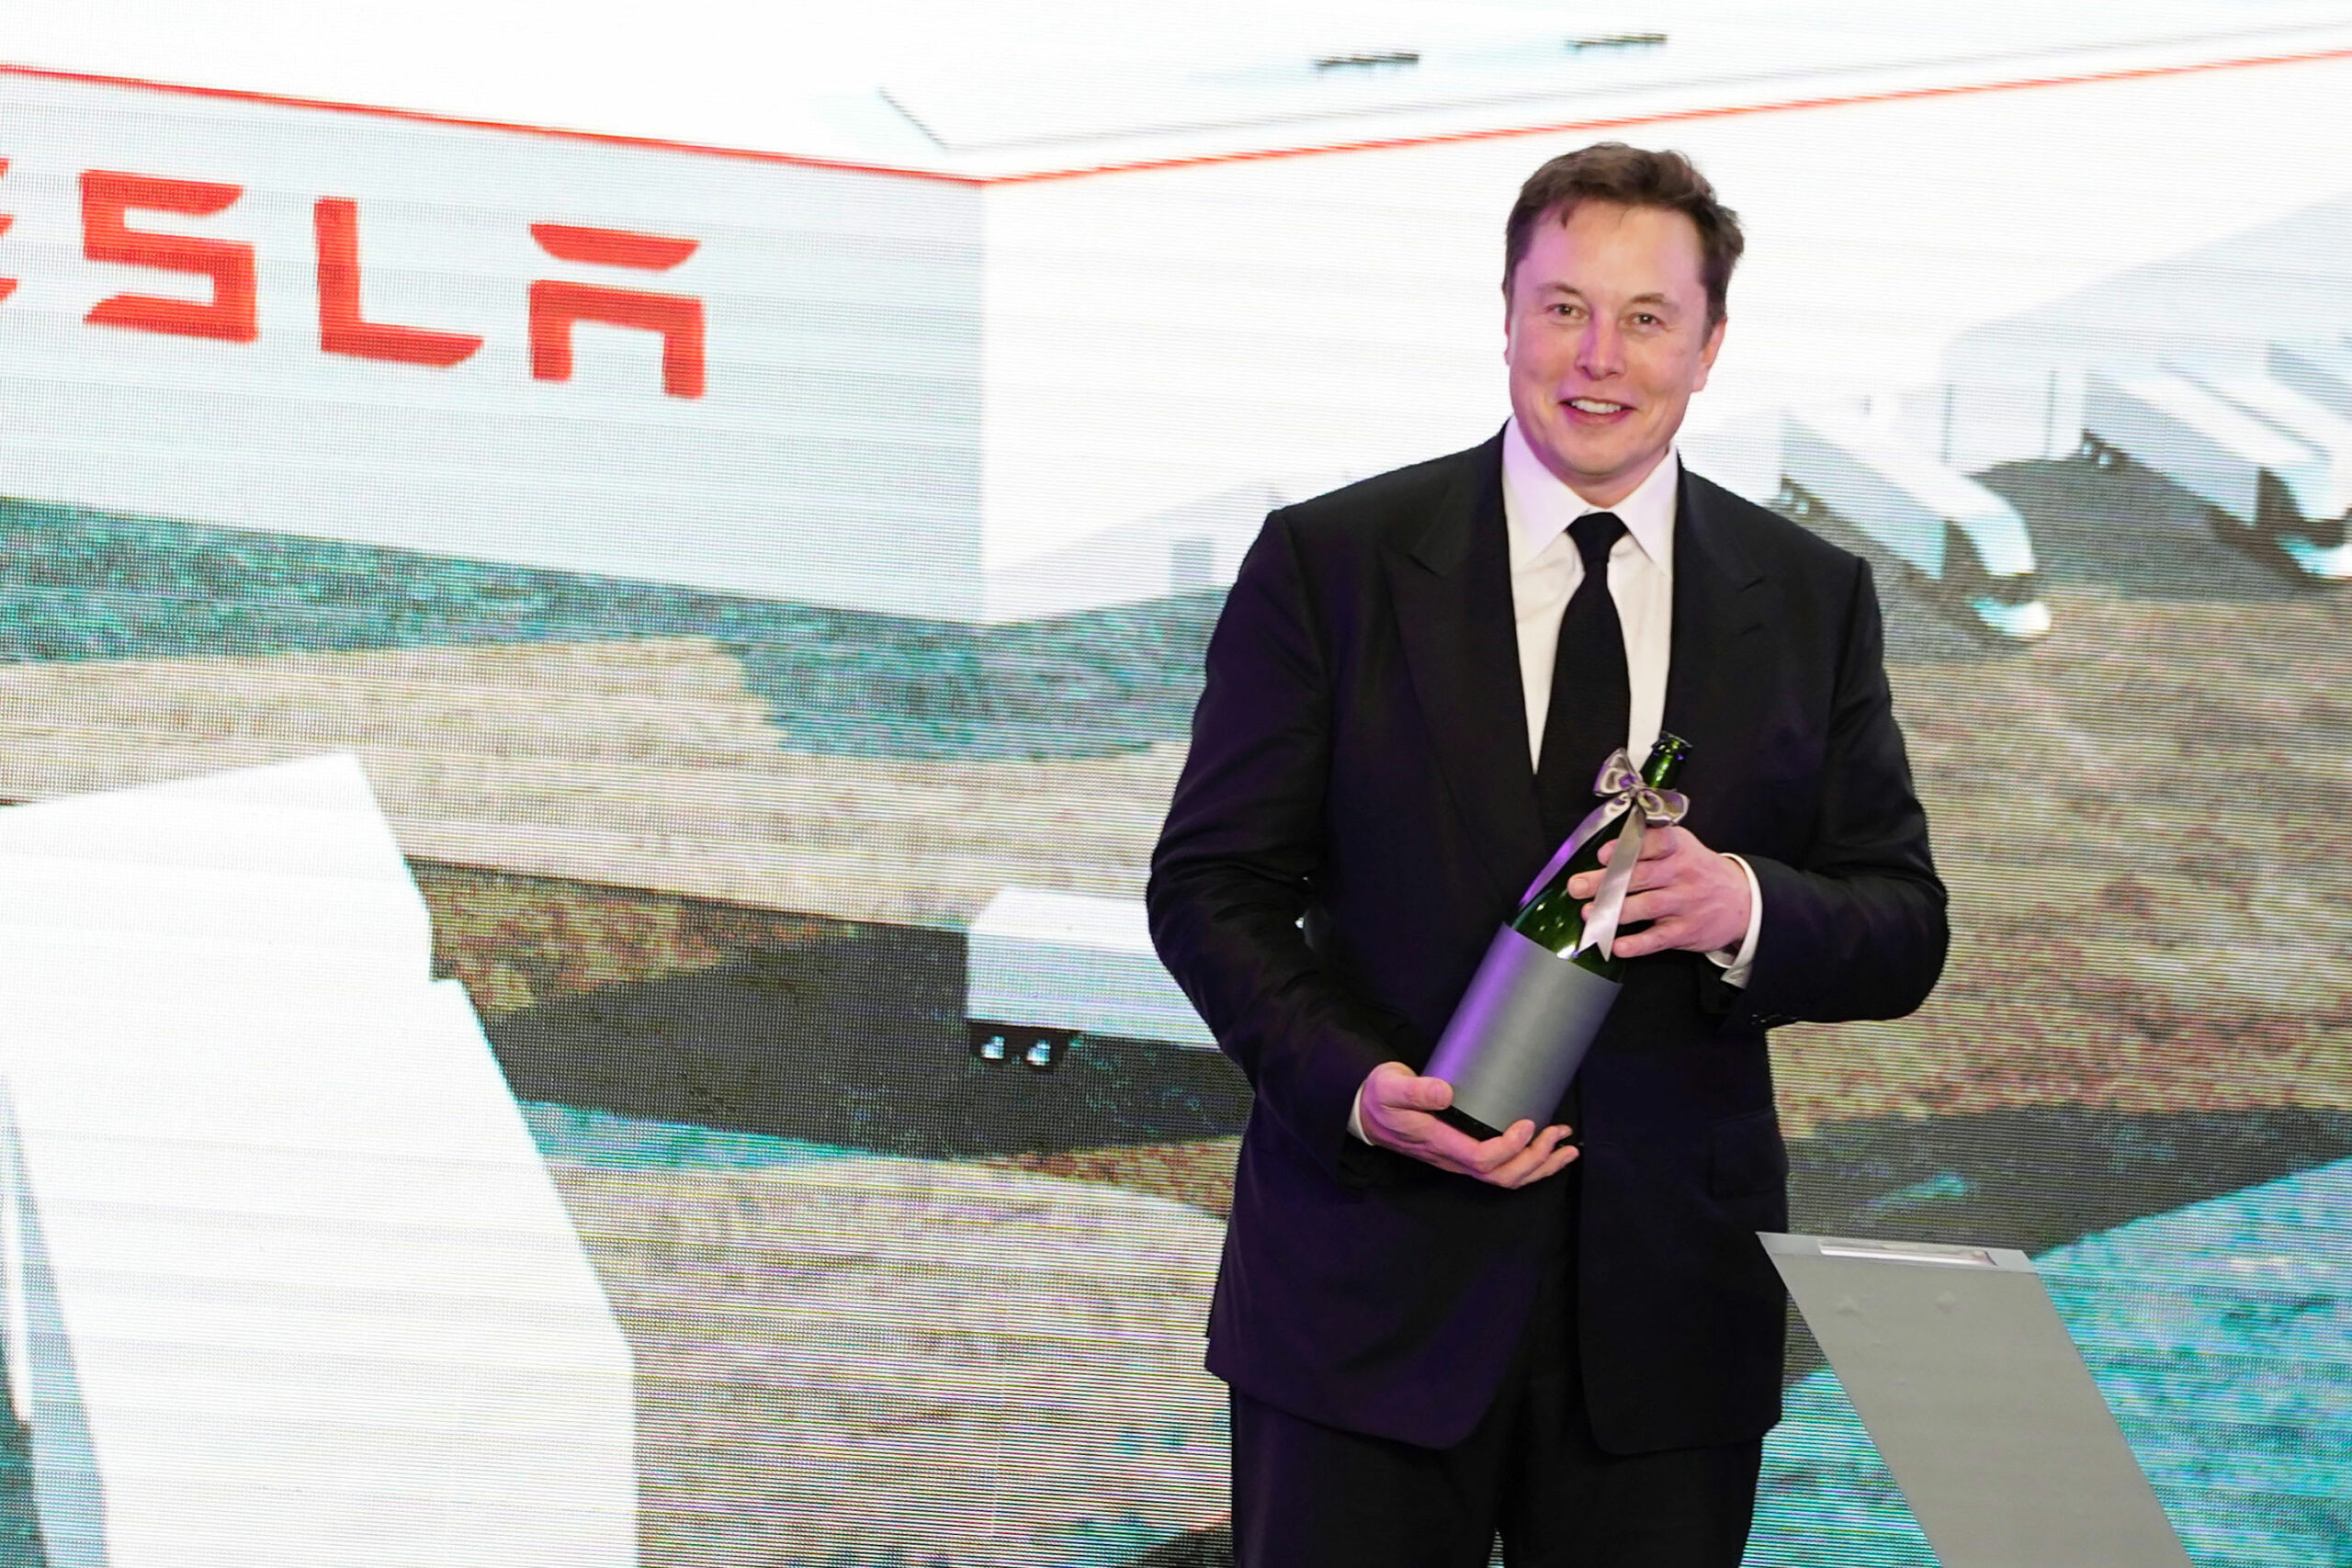 Tesla will build its next Gigafactory in close proximity to Austin, Texas